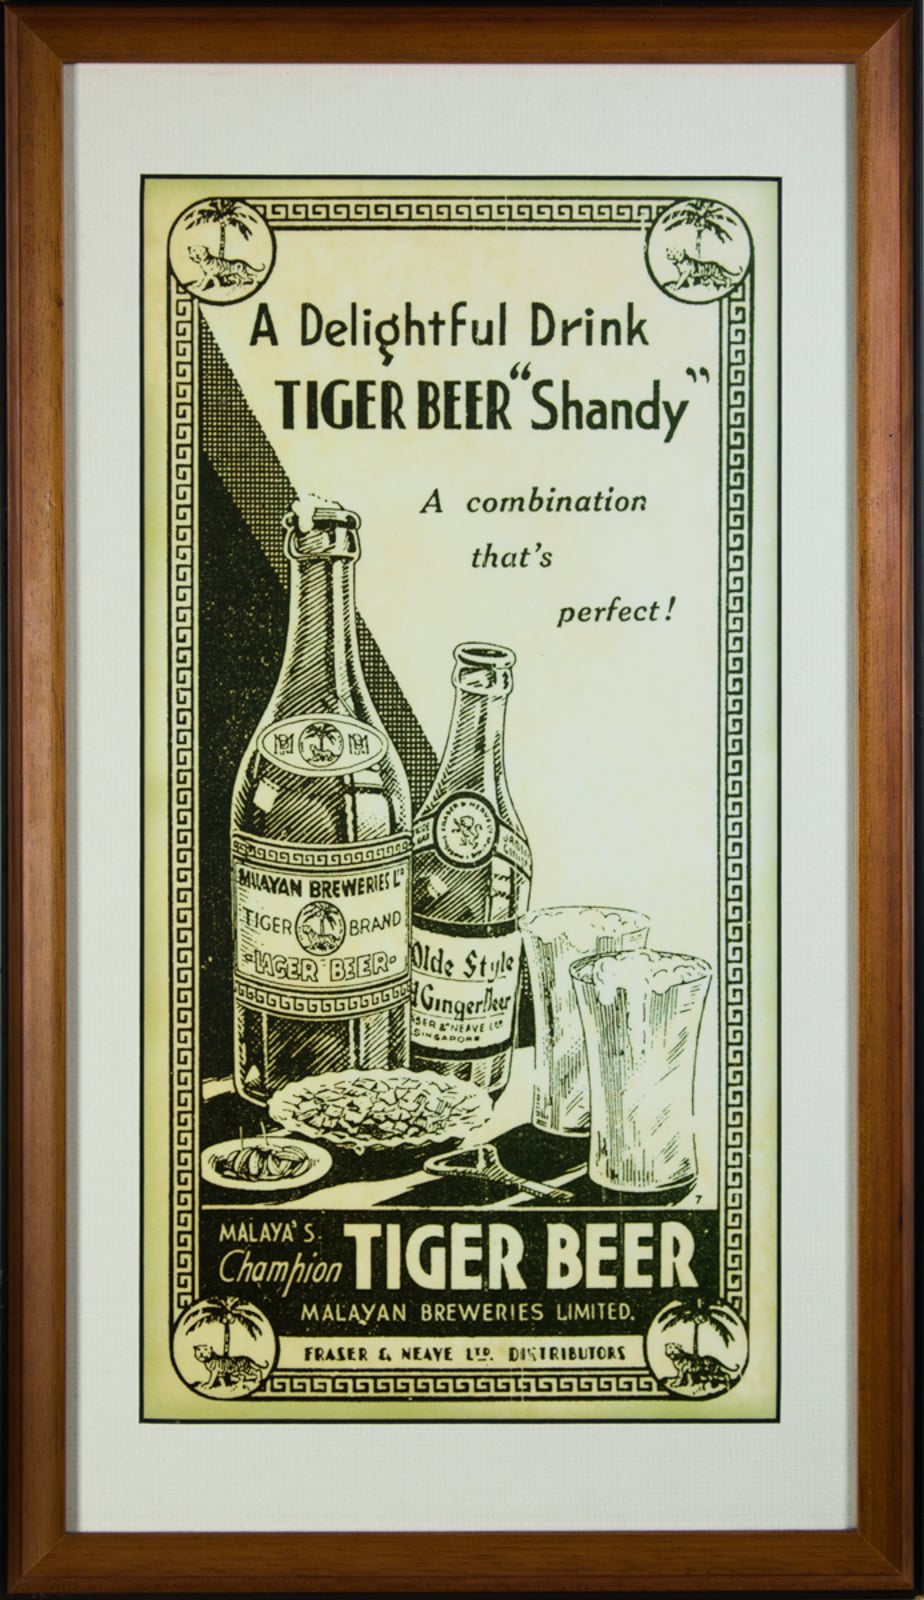 Tiger Beer Shandy Advertisement